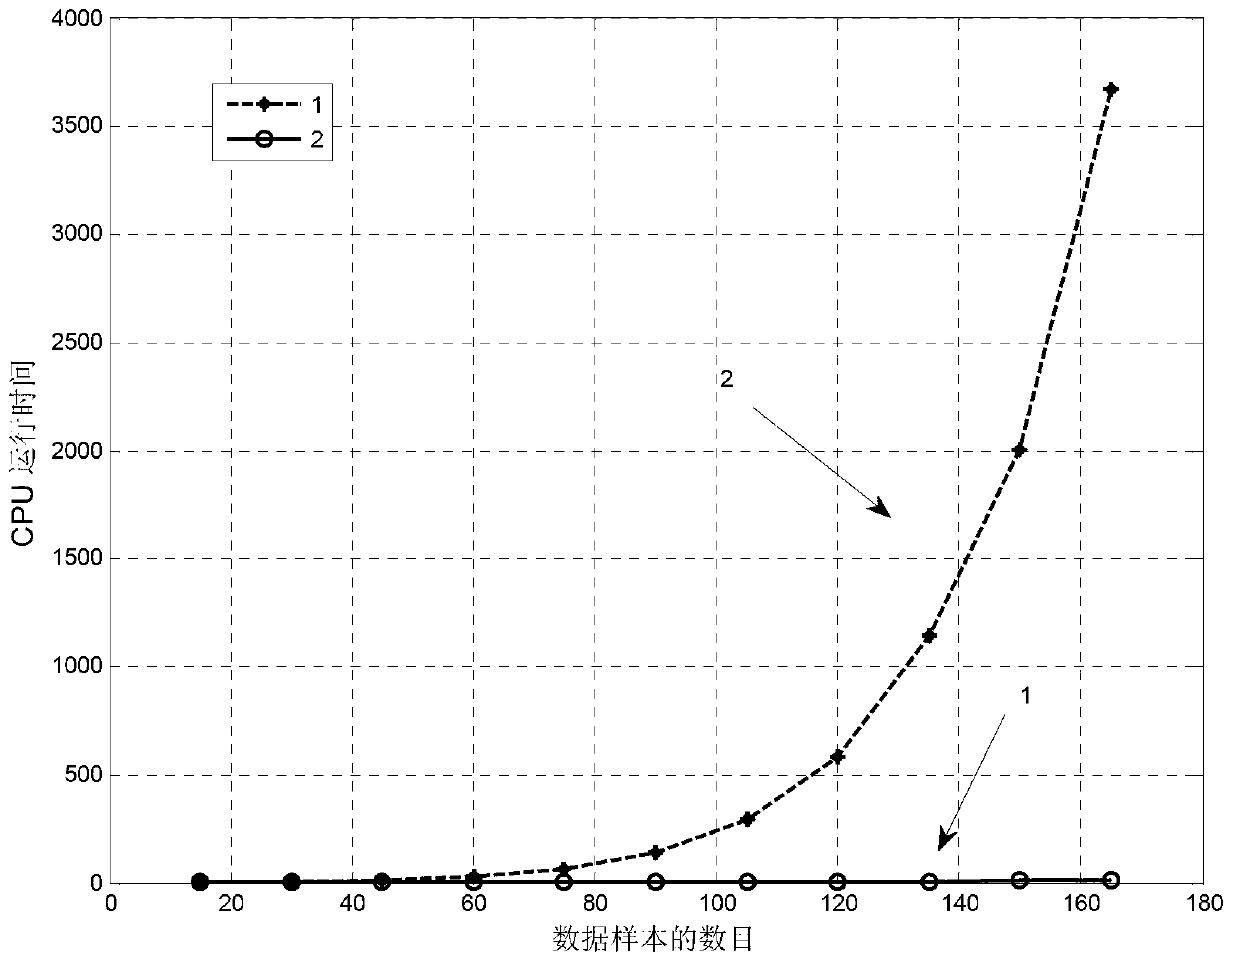 Positive semidefinite spectral clustering method based on Lagrange dual